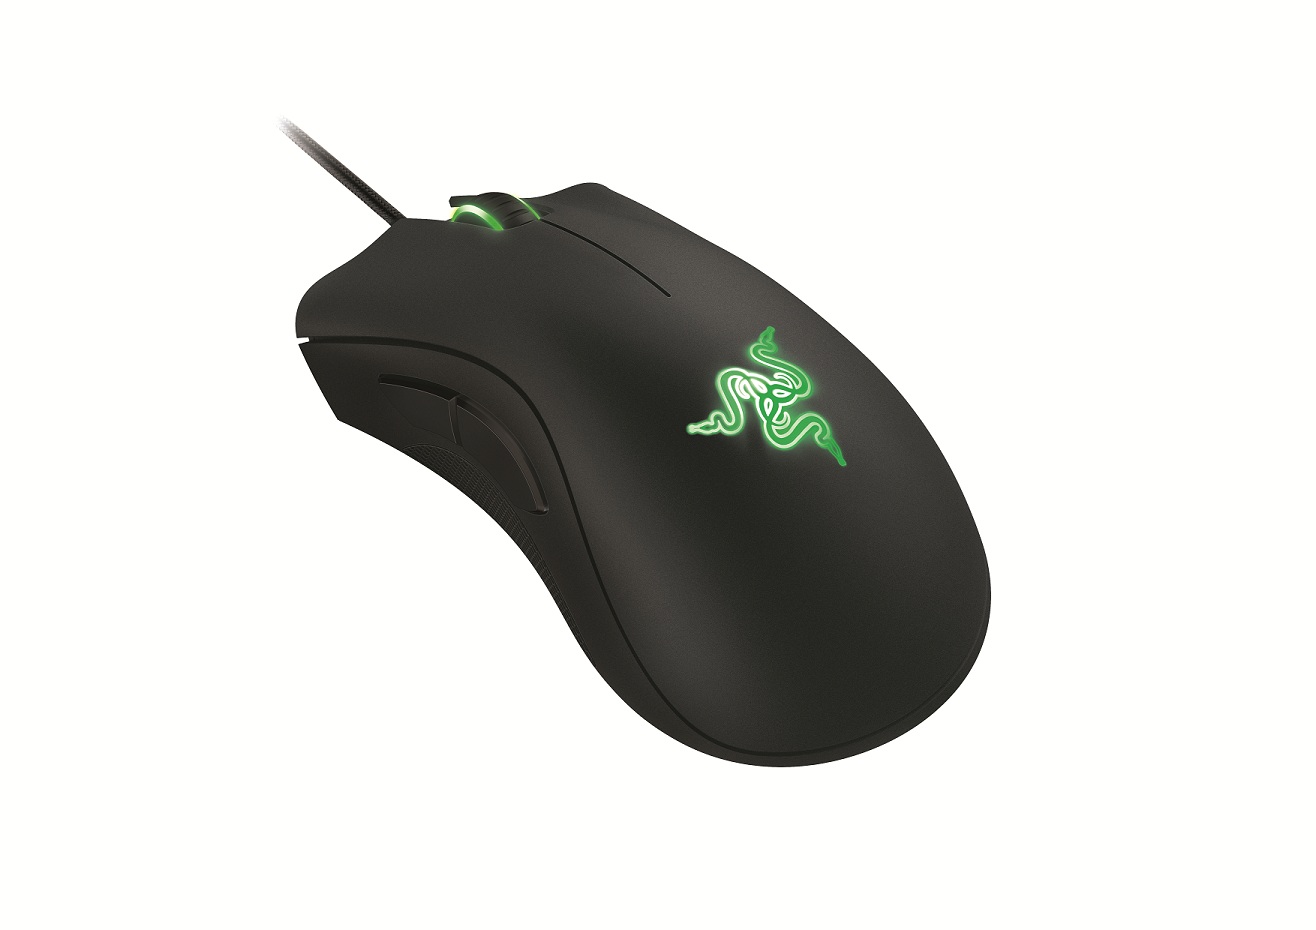 Razer Updates Iconic DeathAdder Gaming Mouse